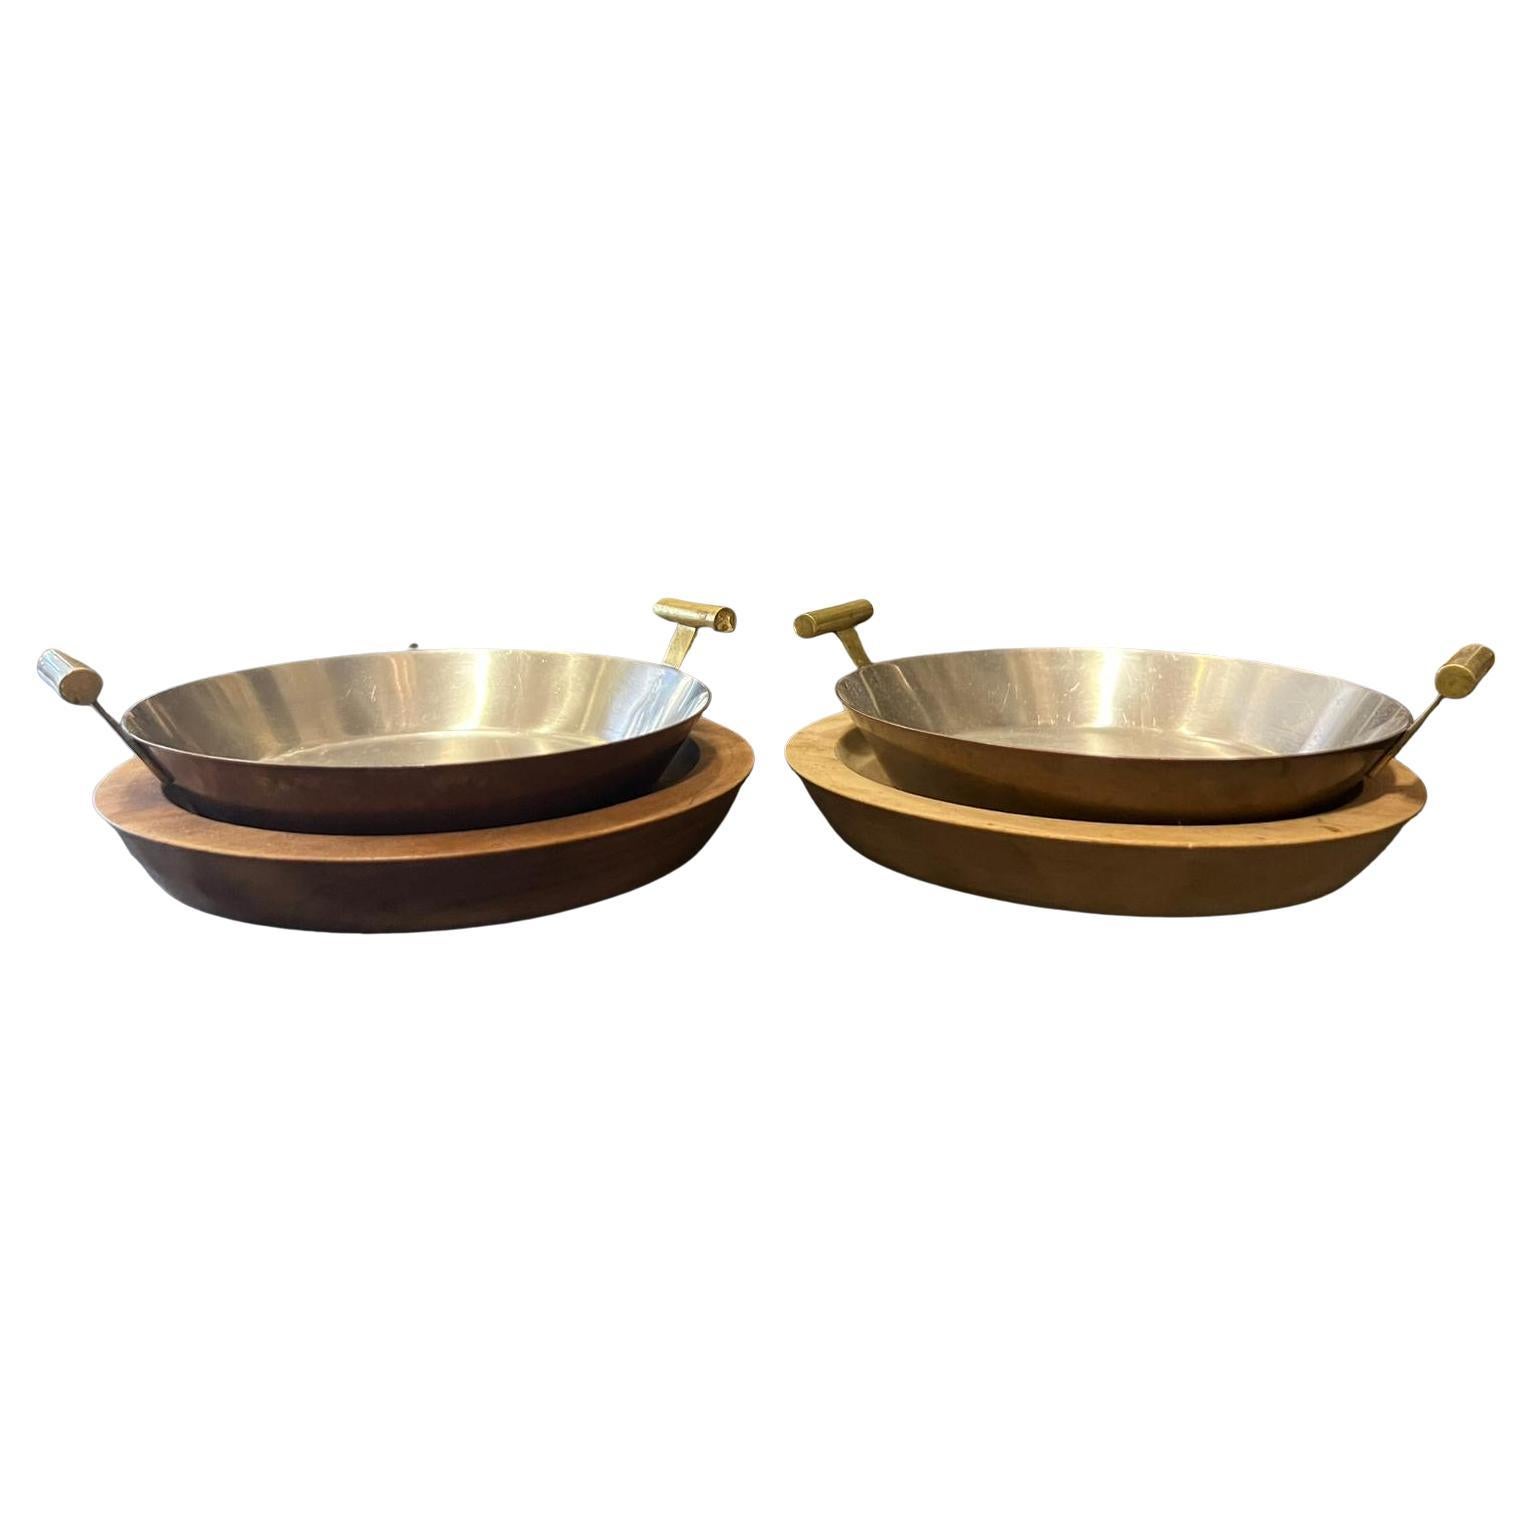 Carl Auböck 1960s, Two copper pans with wooden plate, Vienna Austria, good original condition.
 